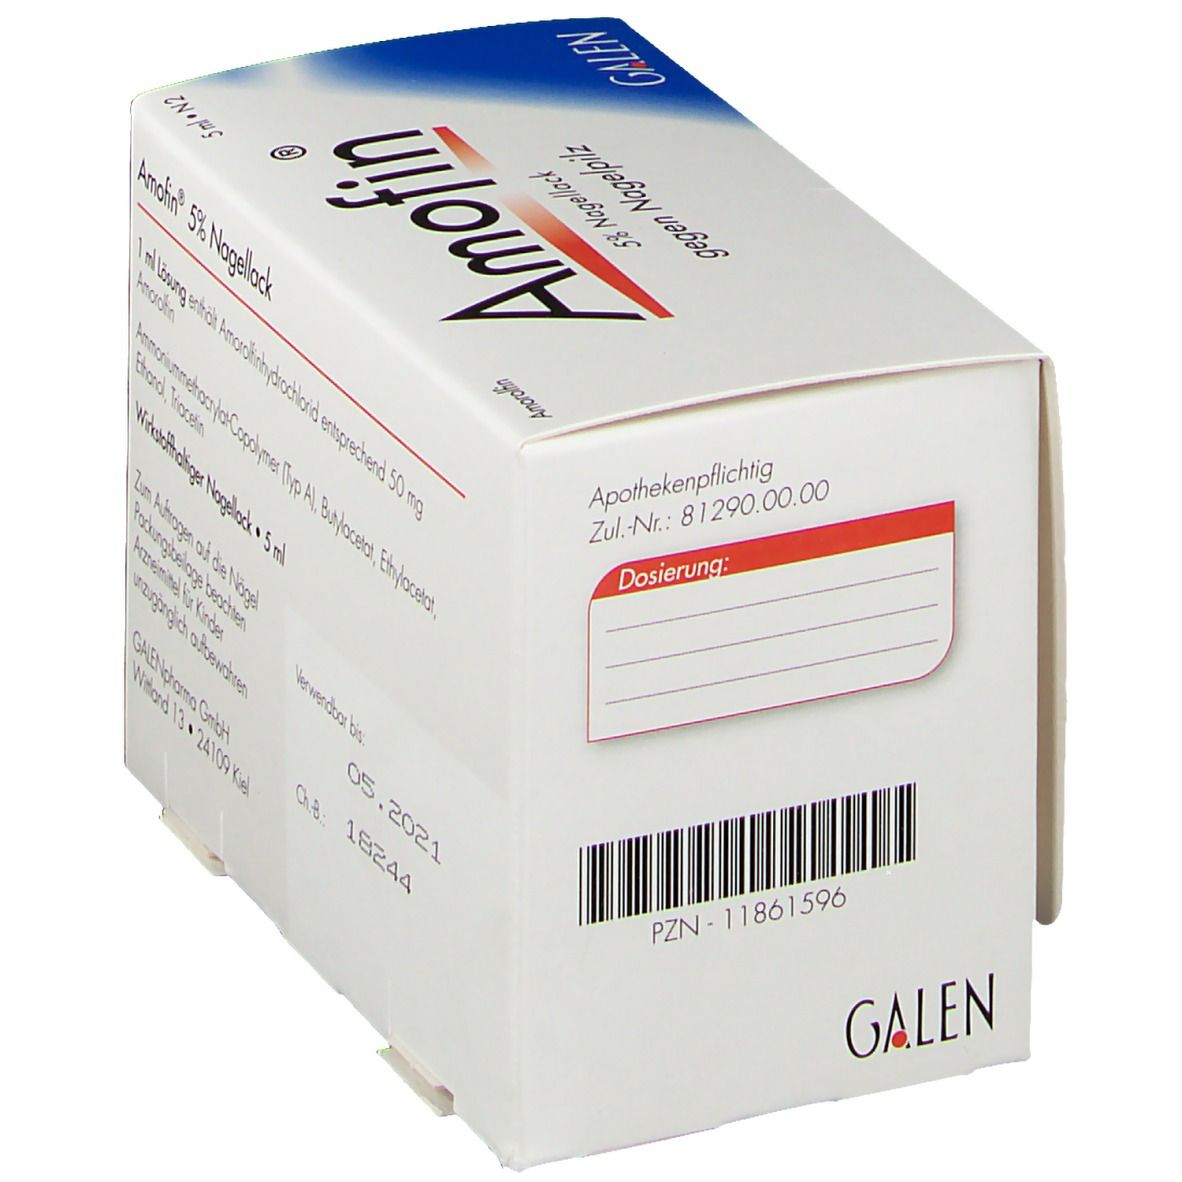 Amofin® 5 % Nagellack gegen Nagelpilz